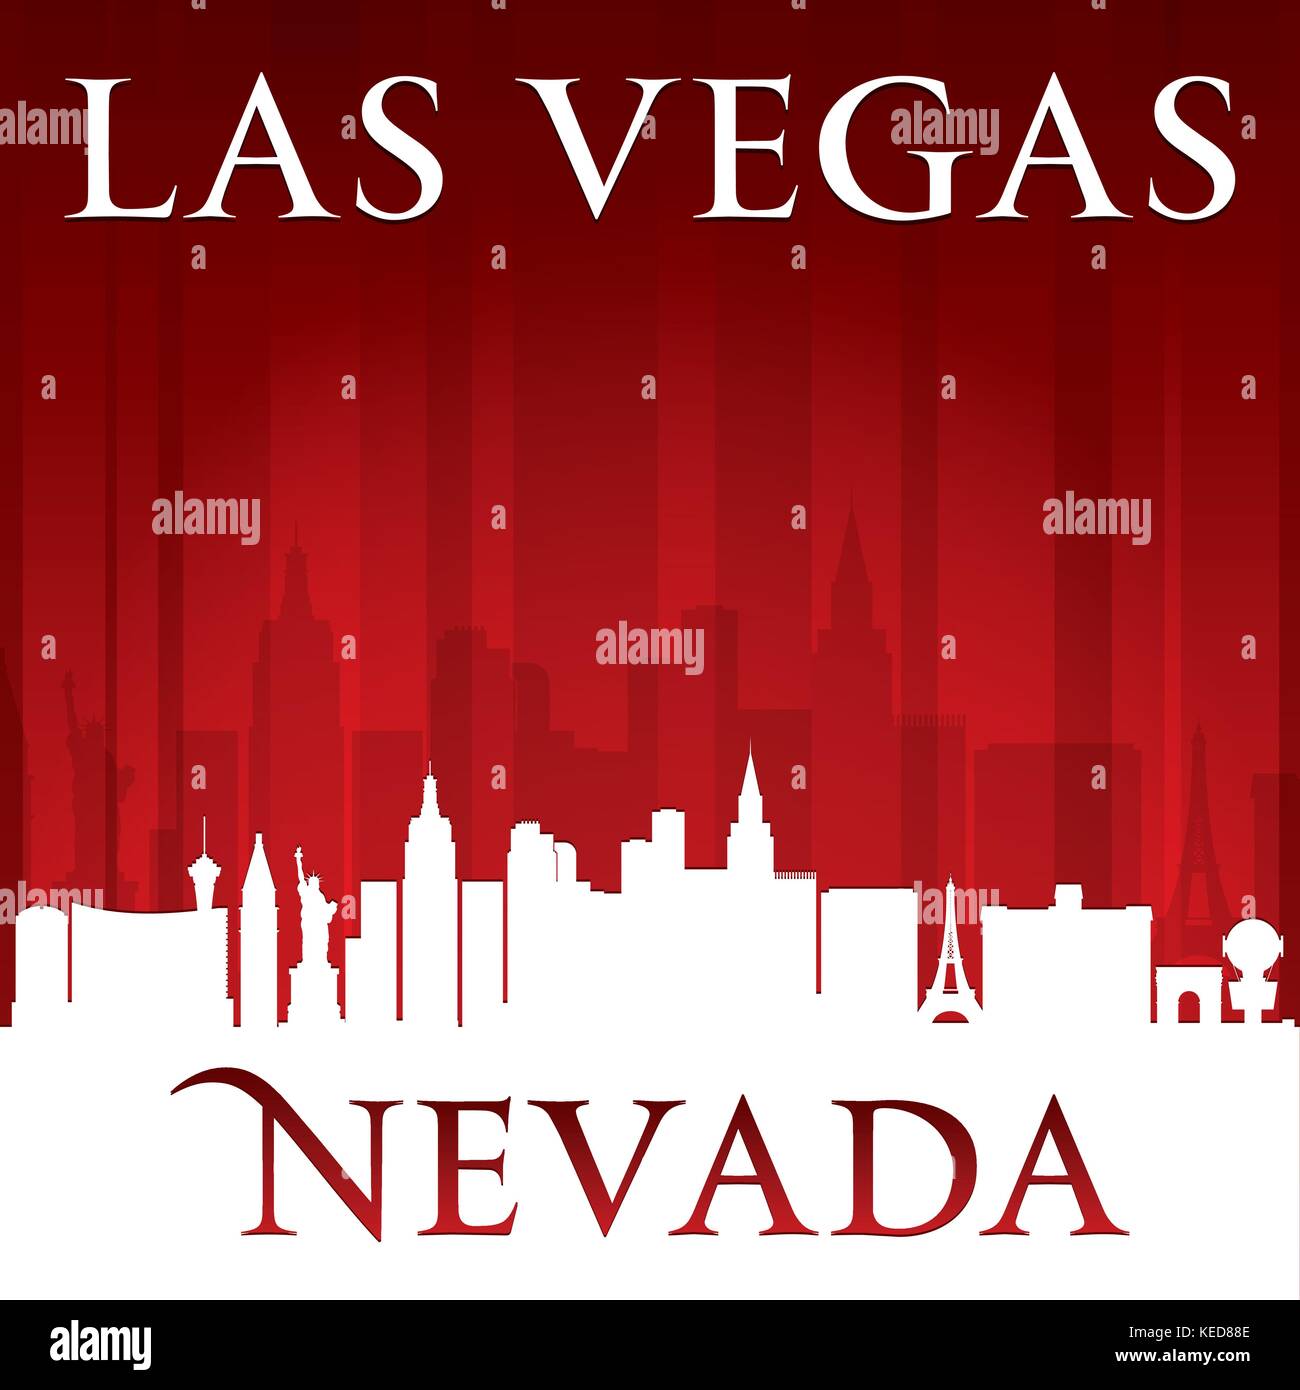 Las Vegas Nevada city skyline silhouette. Vector illustration Stock Vector